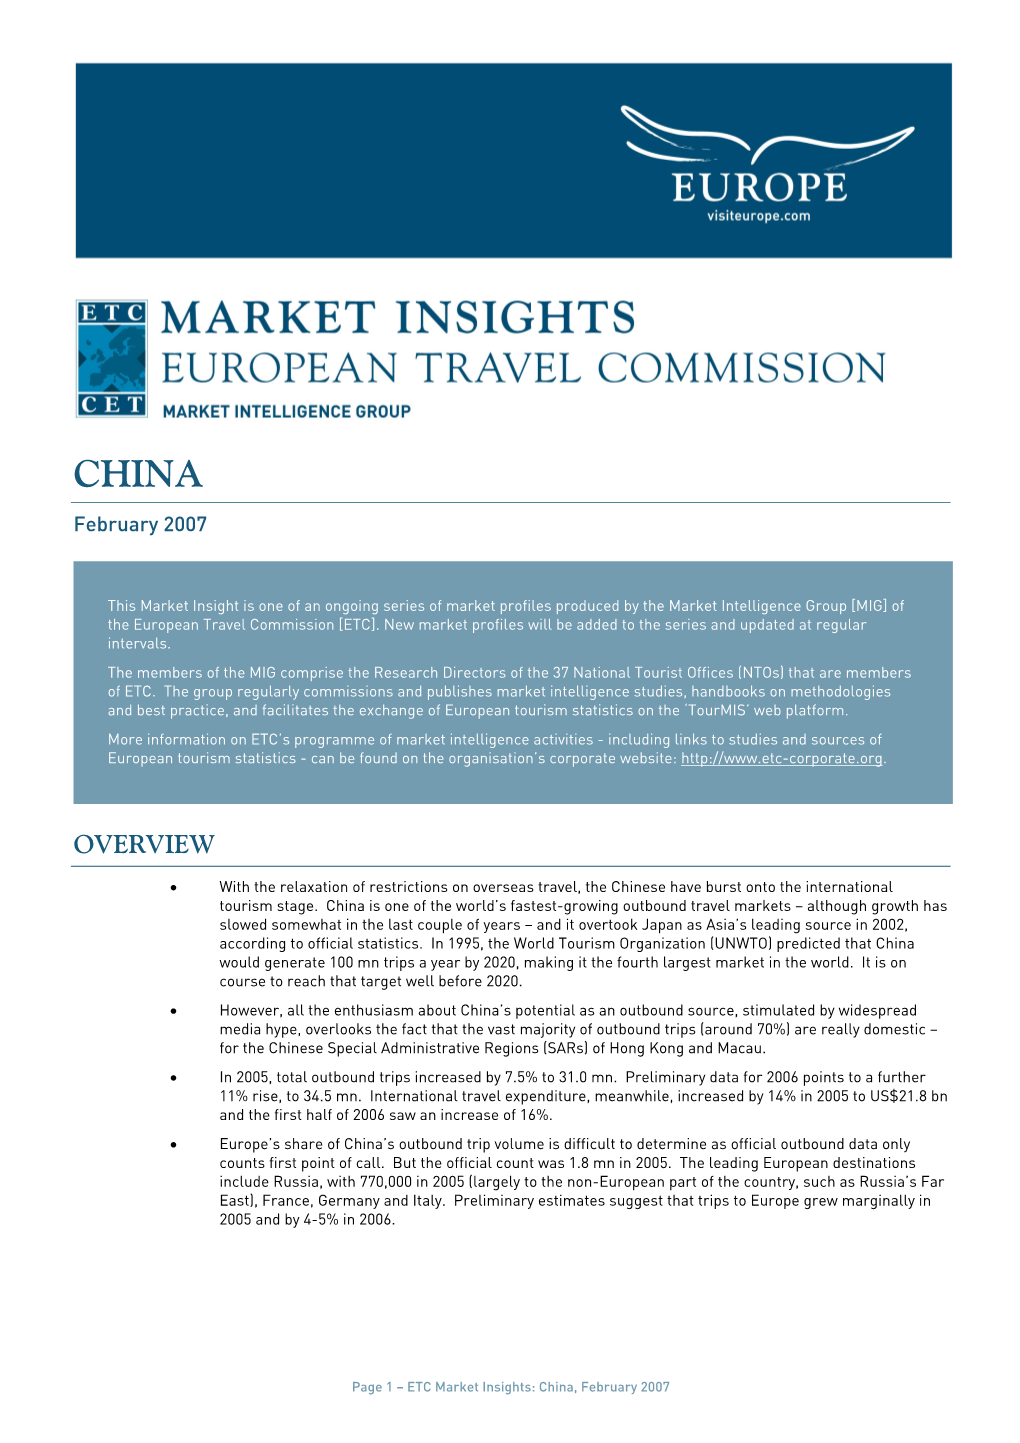 ETC Market Insights: China, February 2007